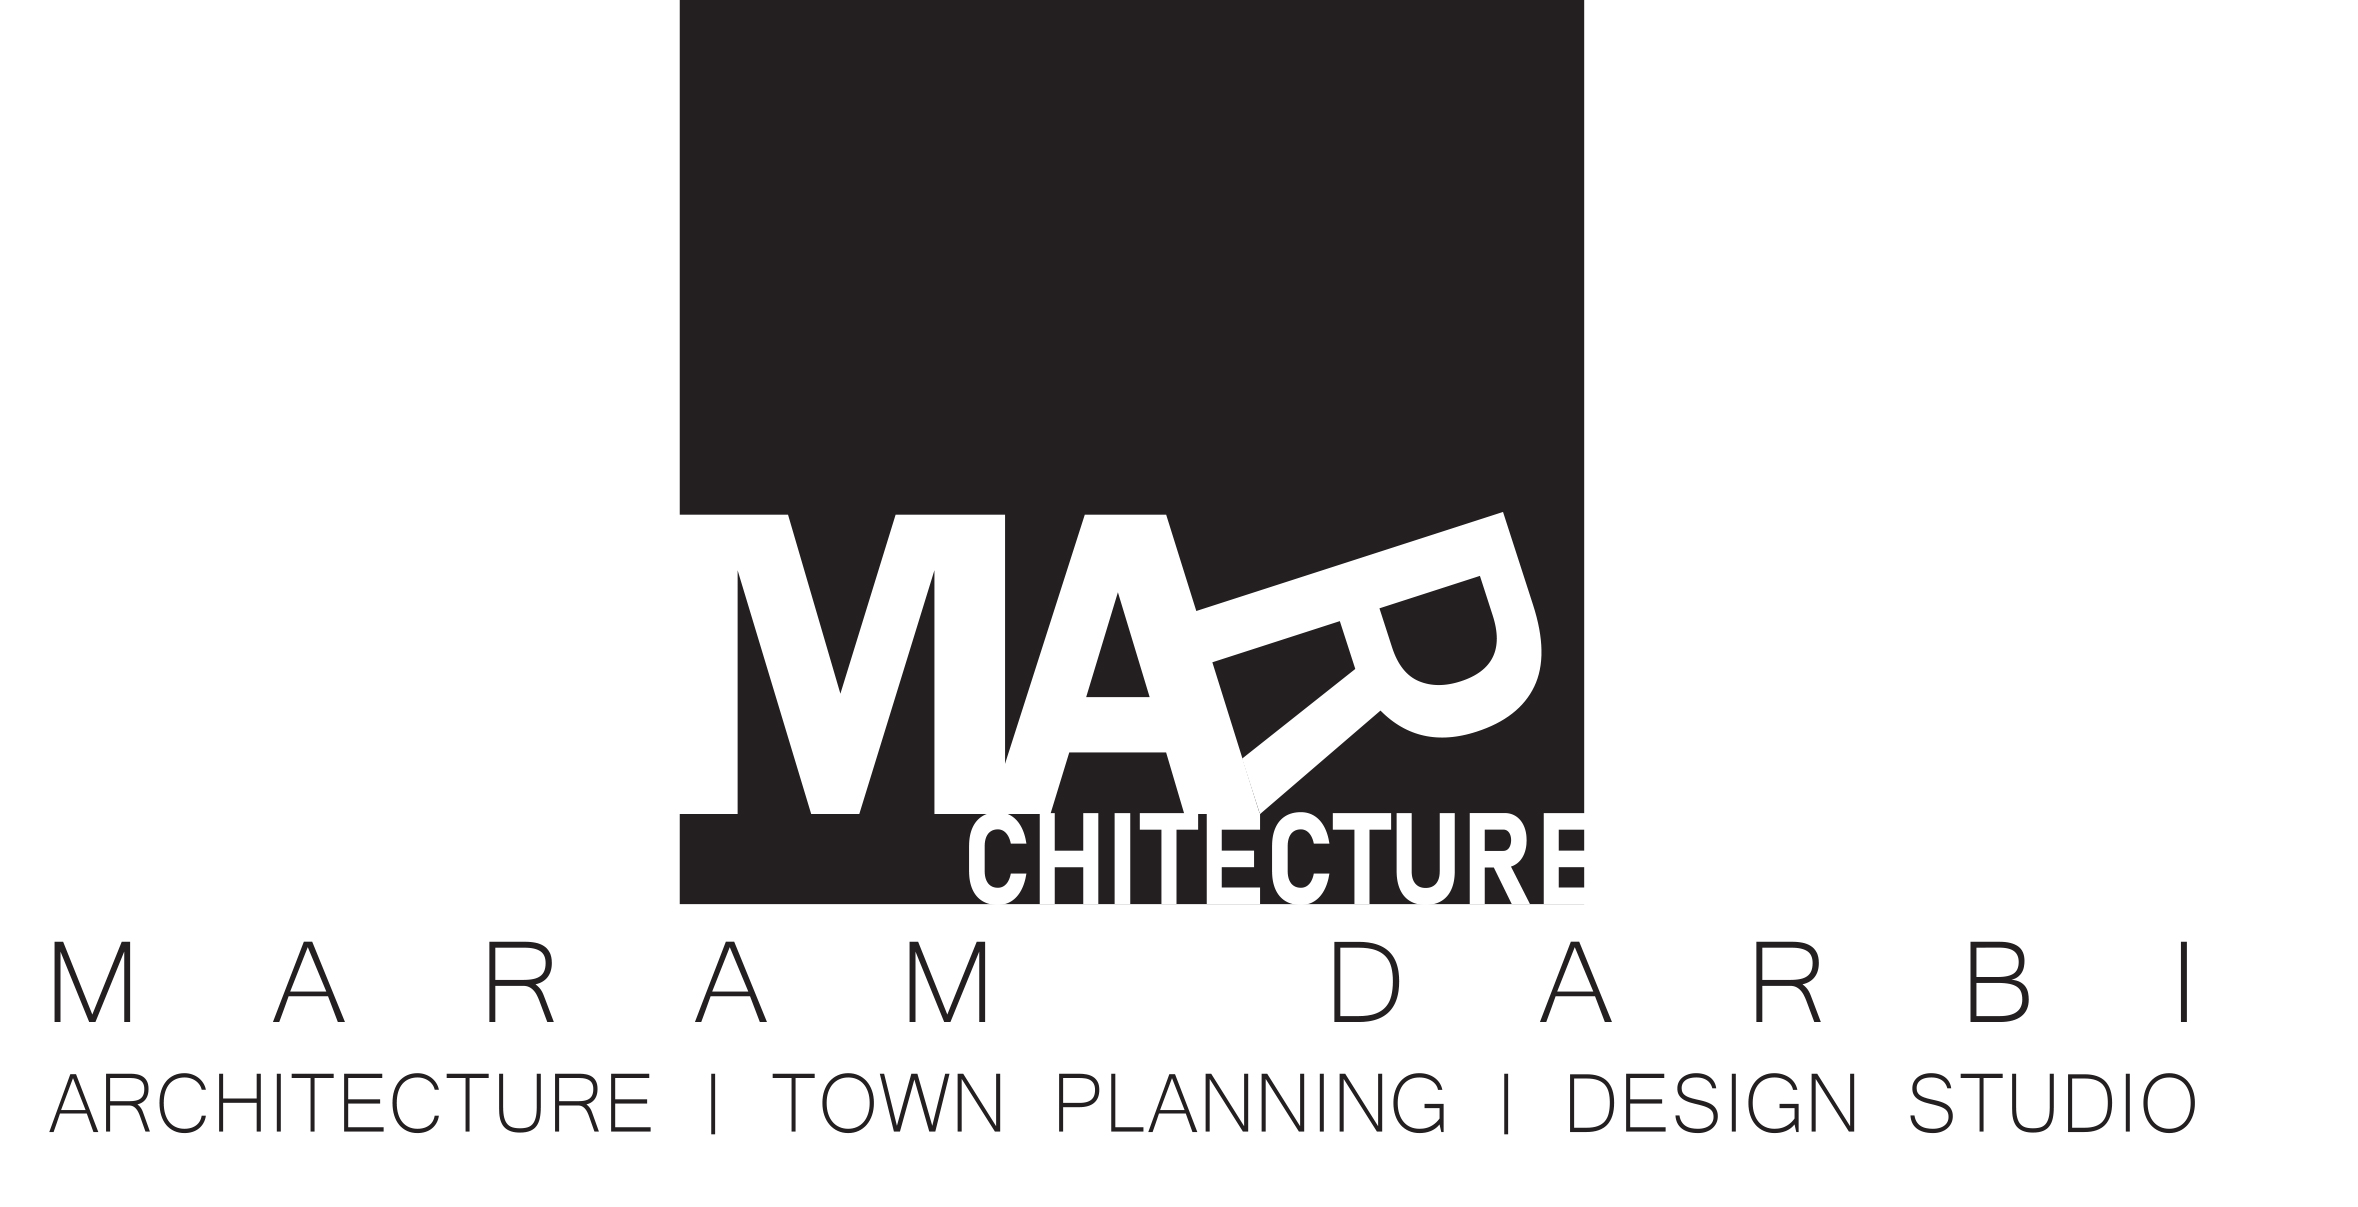 Architecture . Town planning . Design studio